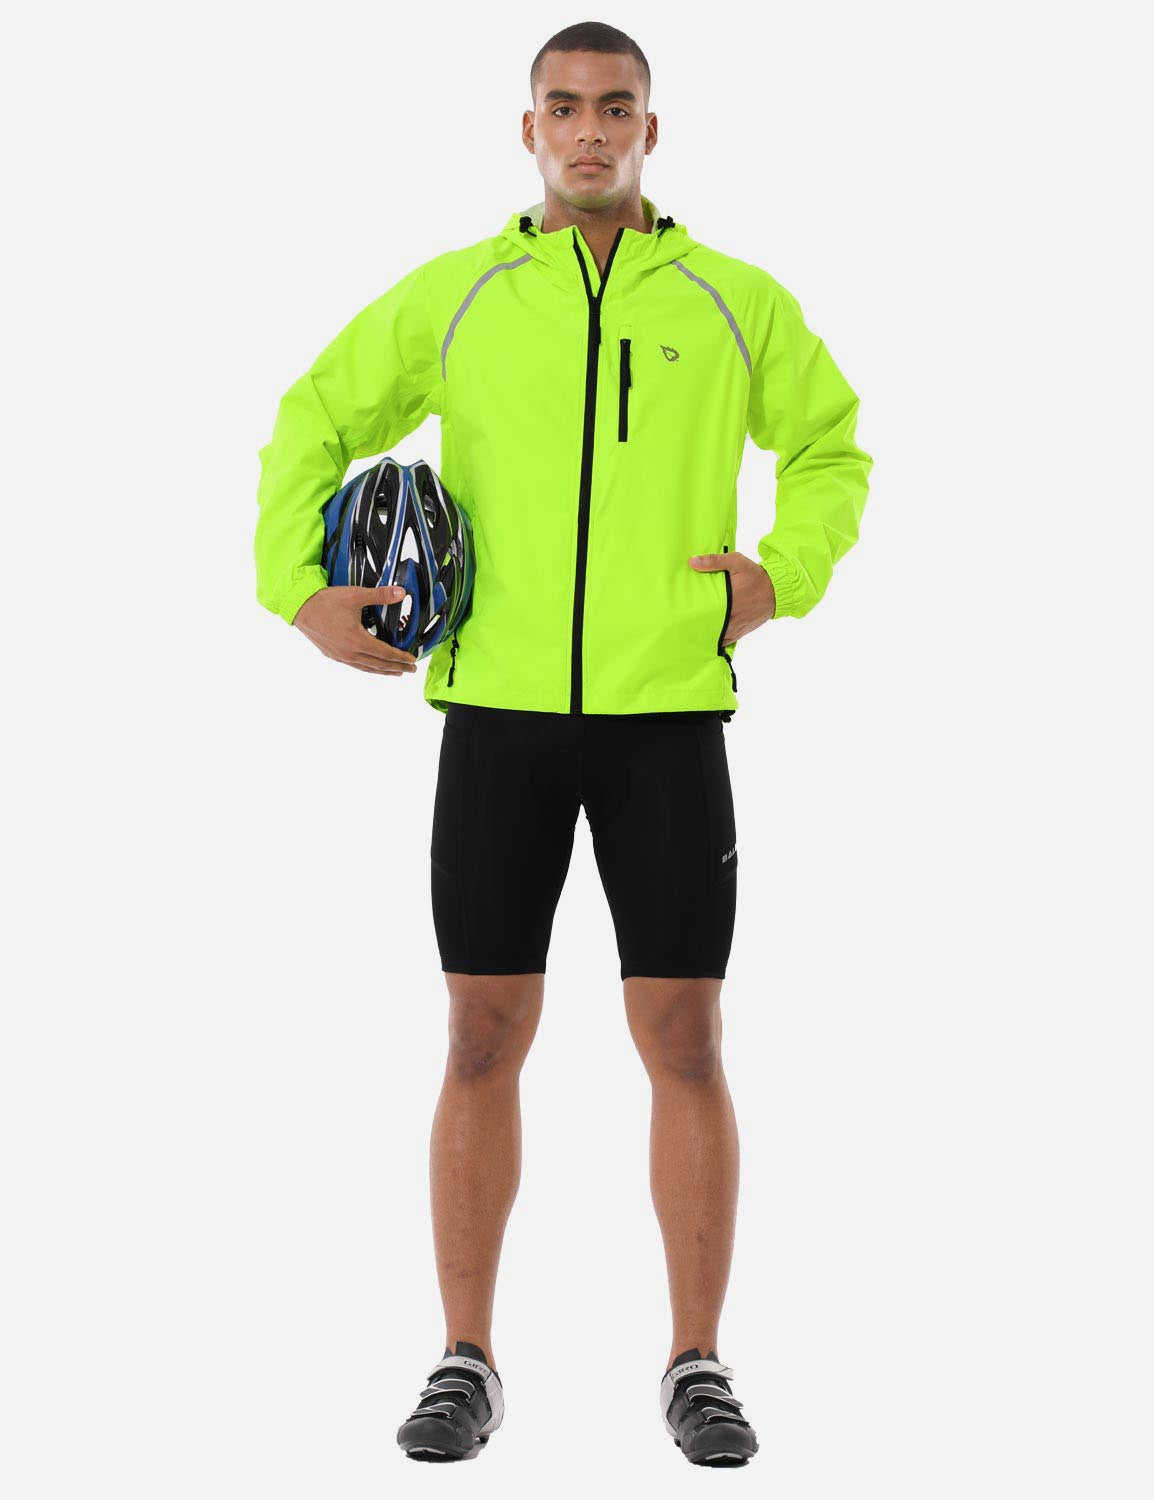 Baleaf Men's Fluorescent Waterproof Packable Windbreaker Track Jacket aaa467 Fluorescent Yellow Full